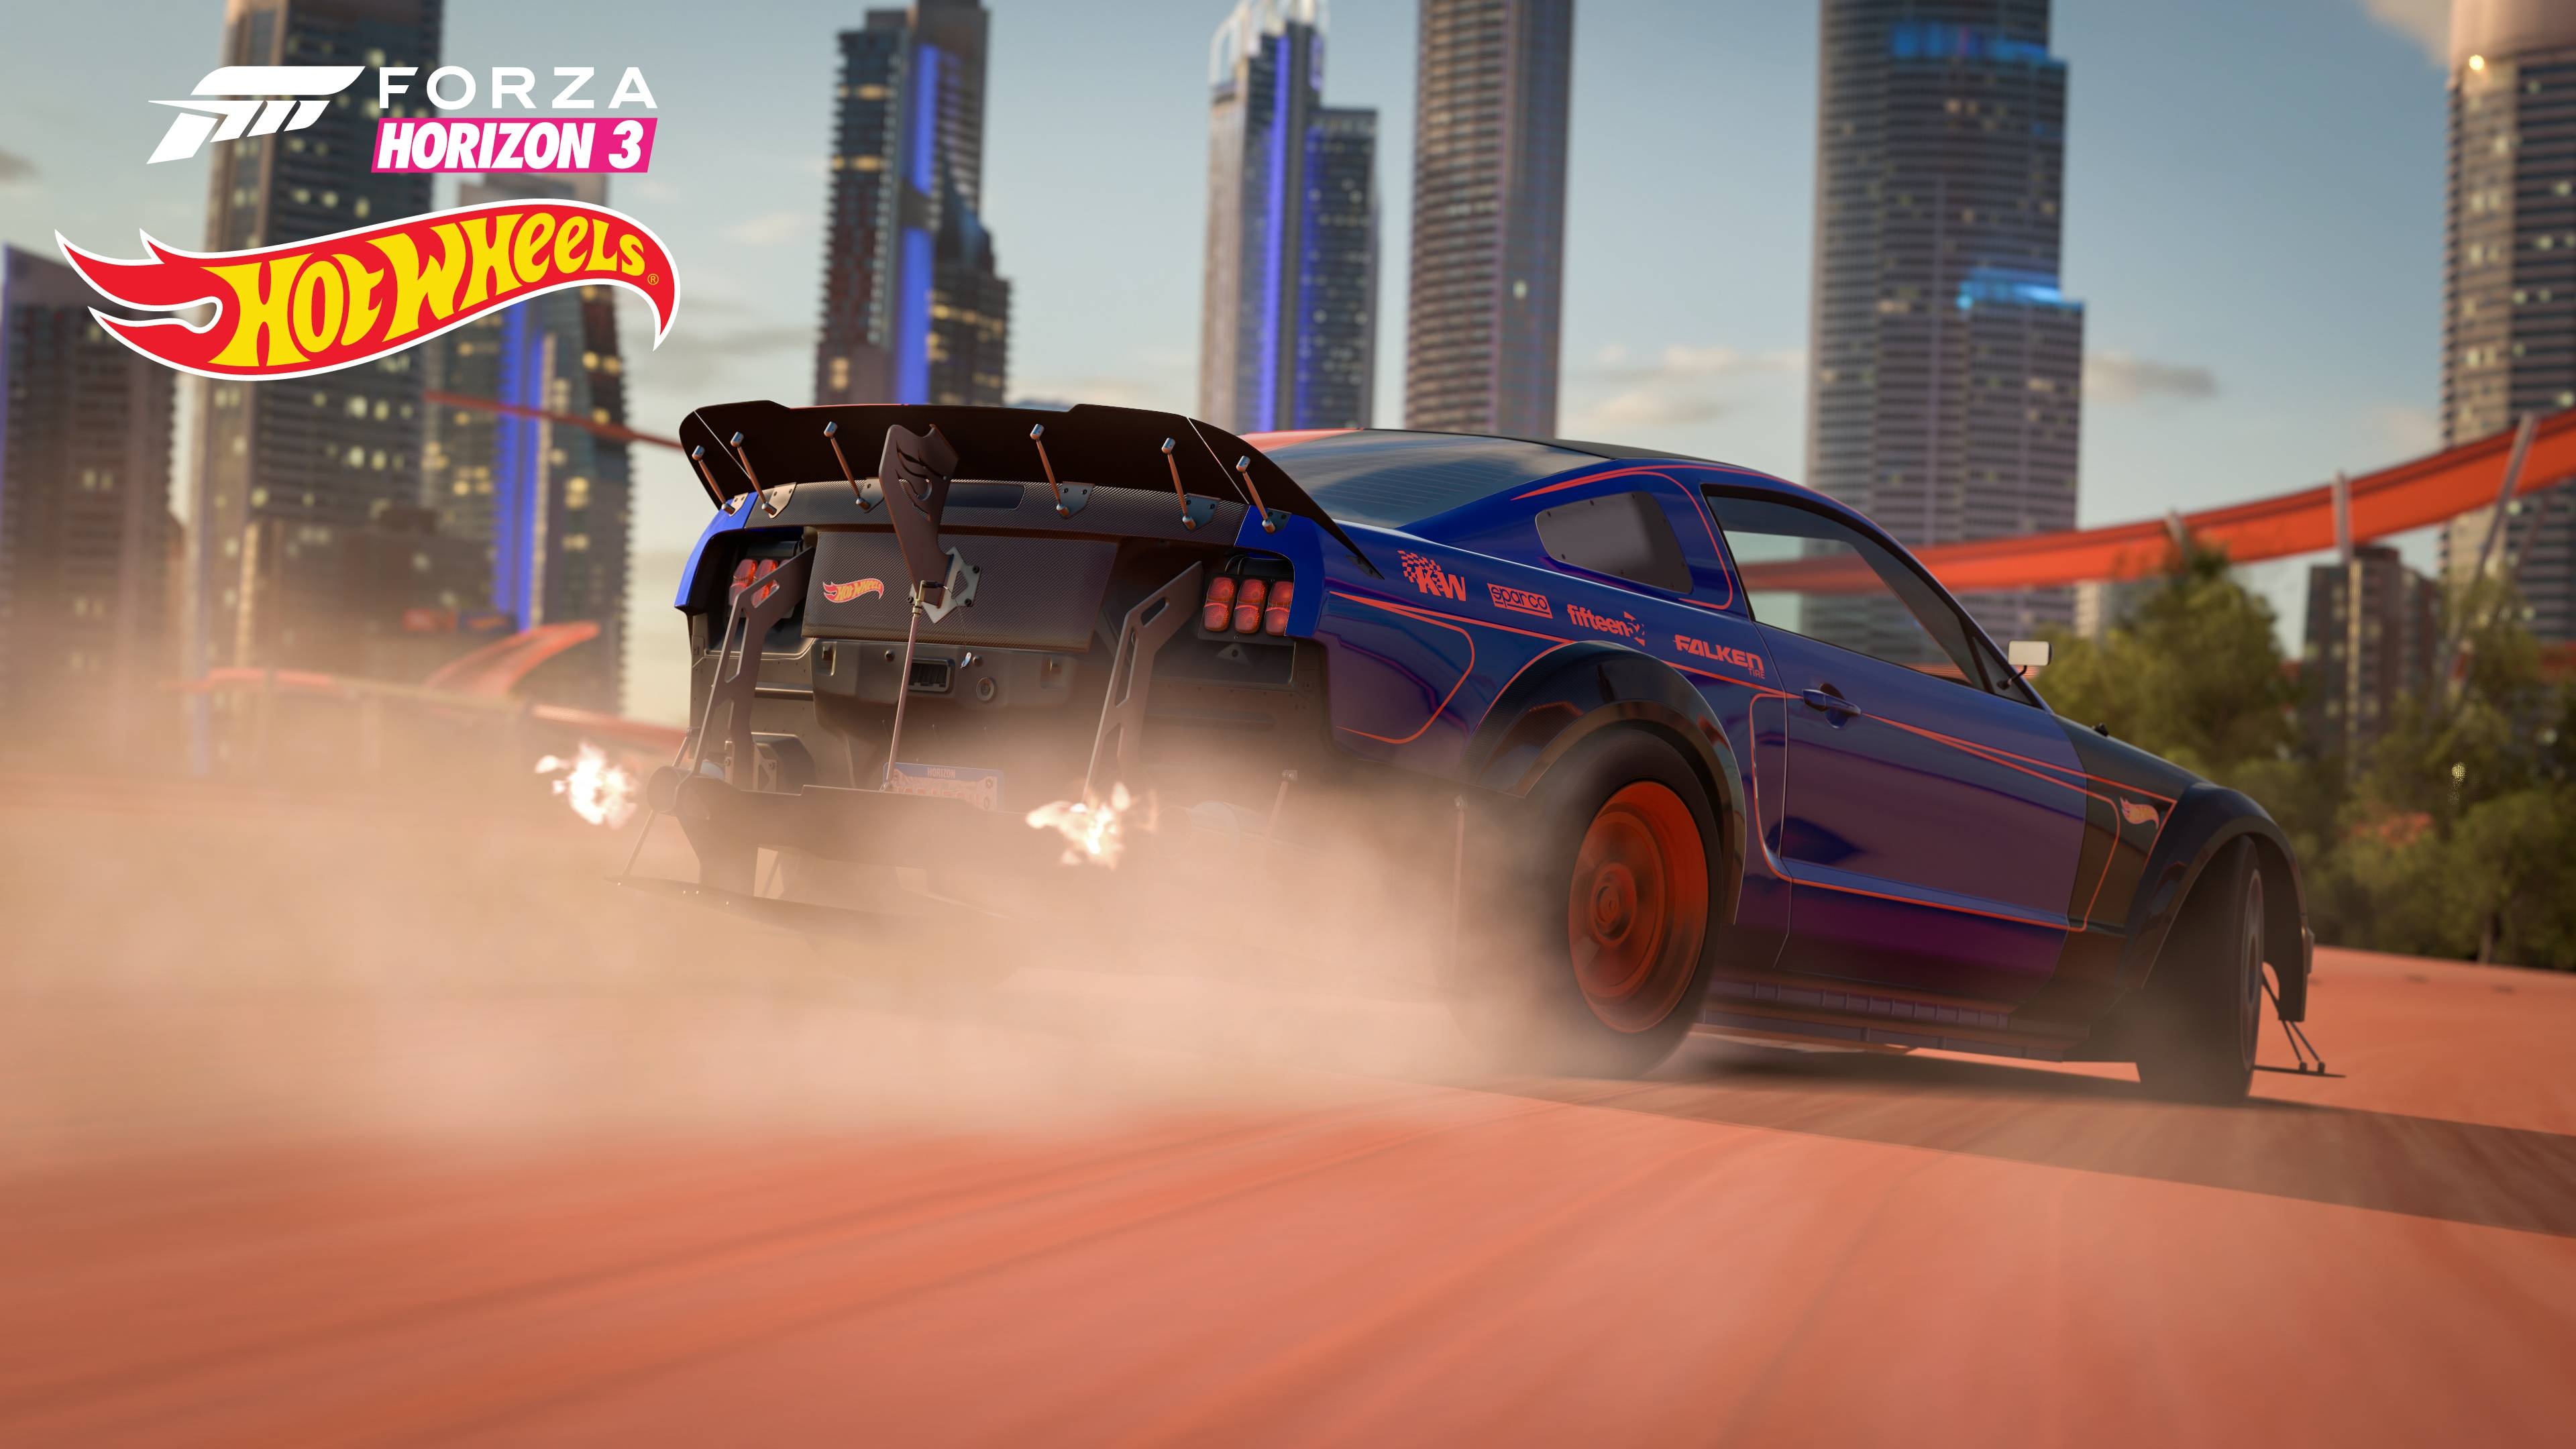 Hot Wheels cars, Forza Horizon 3, Expansion achievements, Epic gaming, 3840x2160 4K Desktop